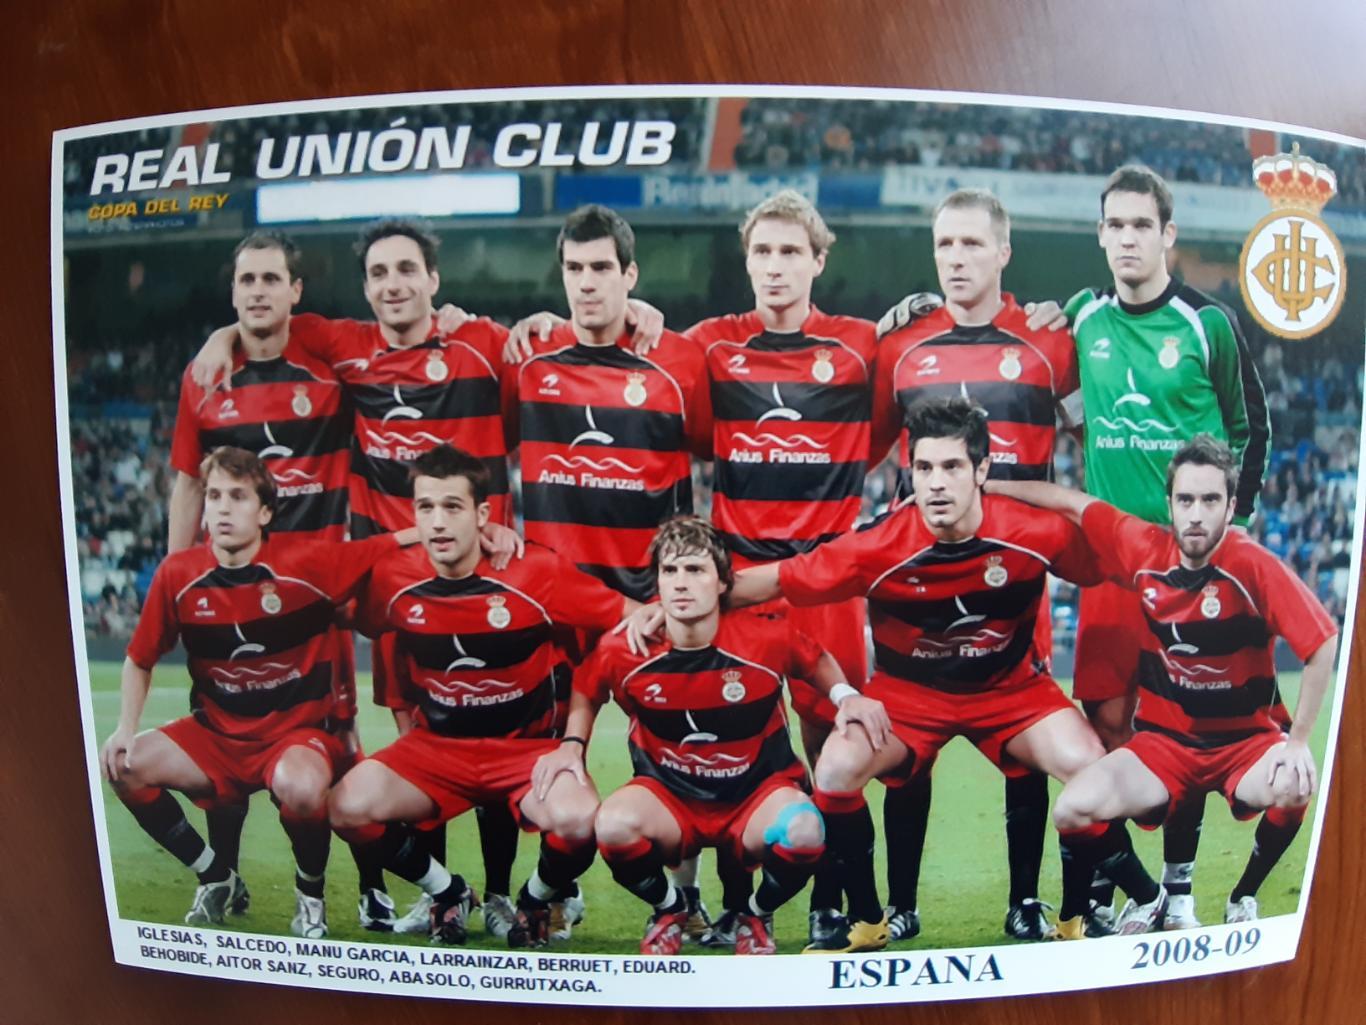 REAL UNION CLUB 2008/09 (SPAIN)